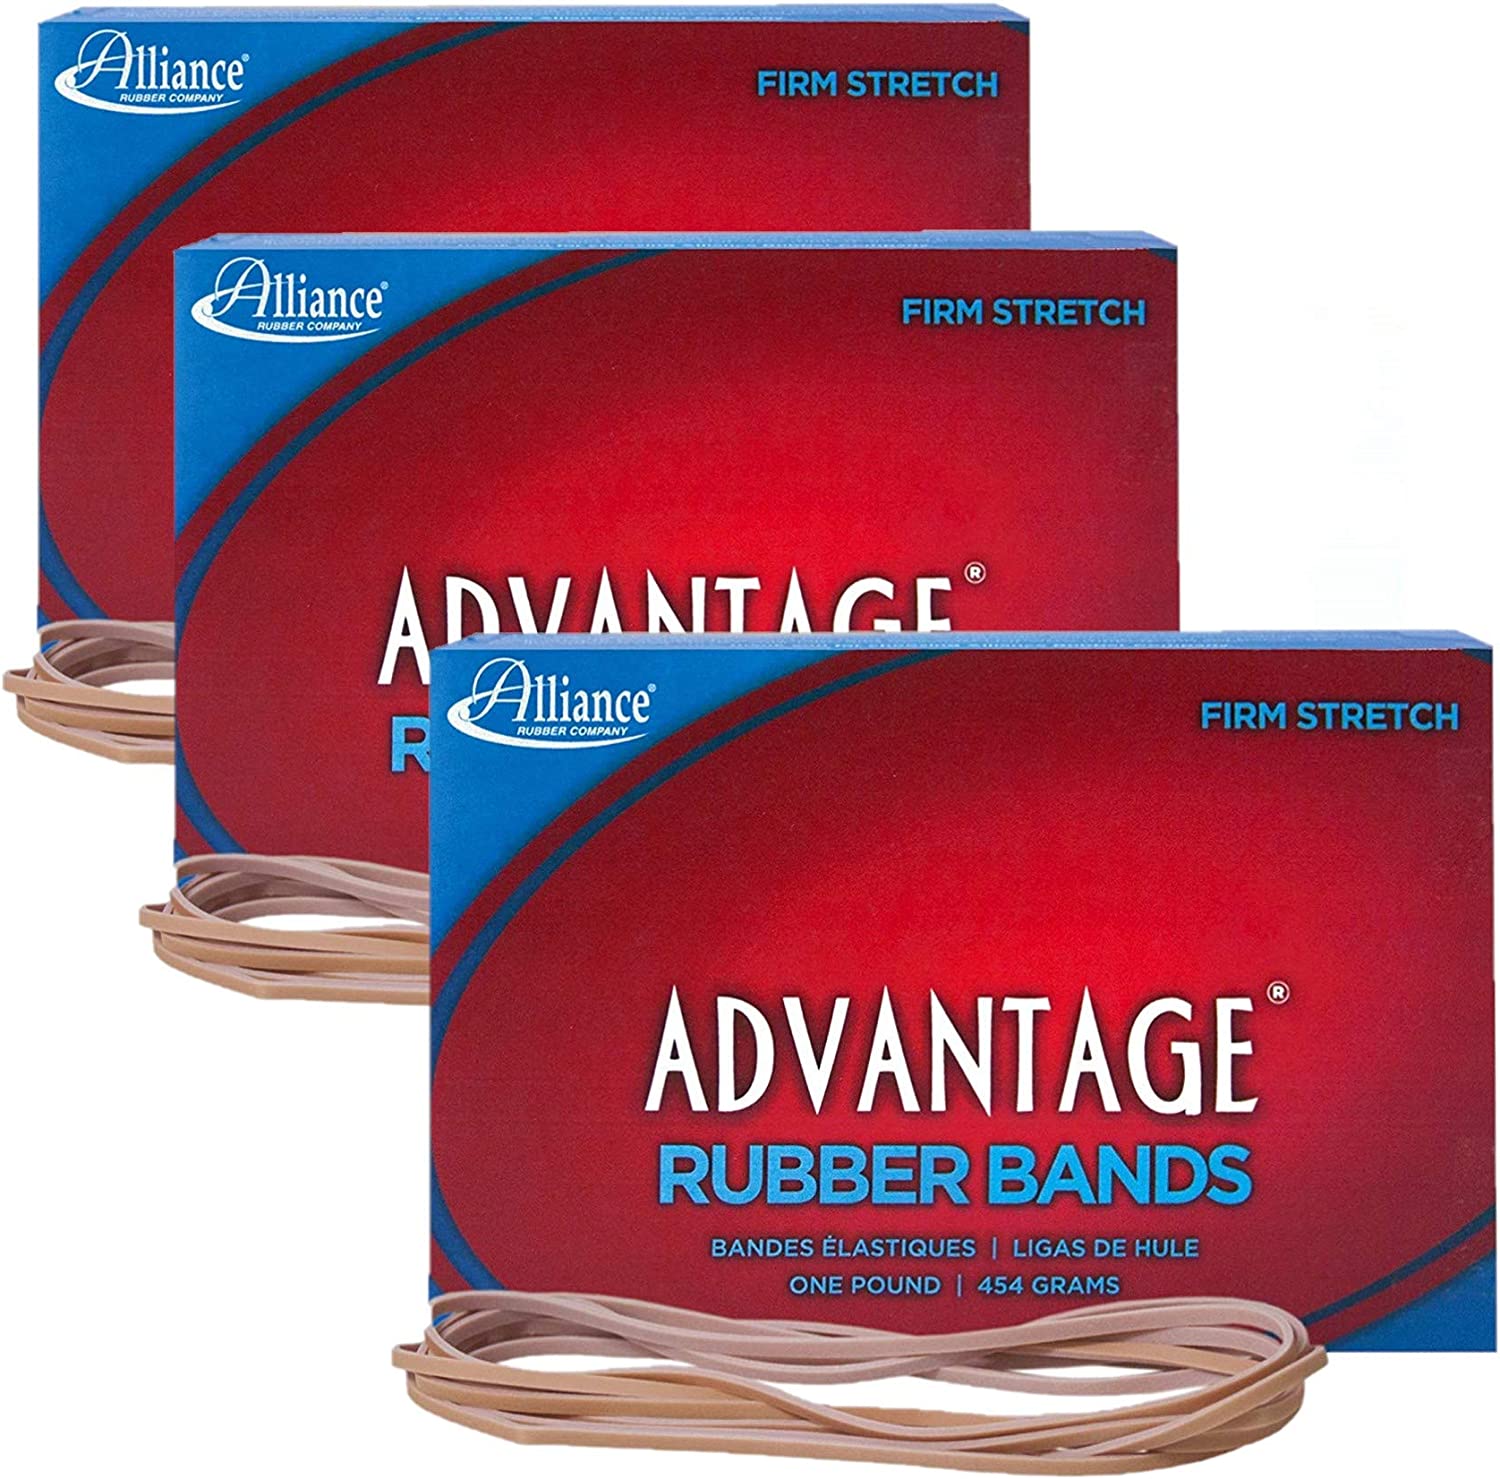 ''Alliance RUBBER 27405 Advantage RUBBER BANDS Size #117B, 1 lb Box Contains Approx. 600 BANDS (7'''' x